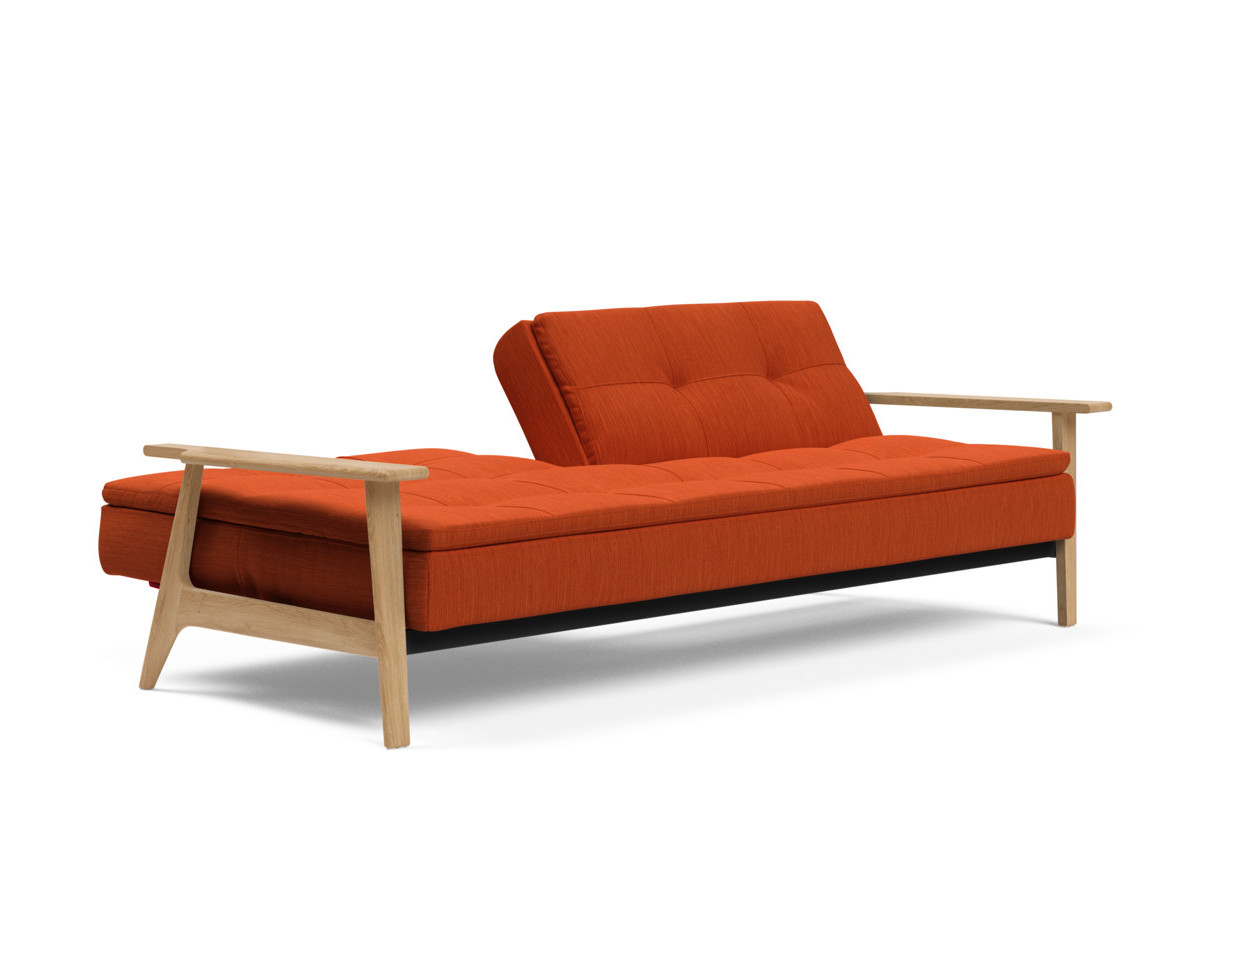 Dublexo Deluxe Sofa Bed w/Frej Arms Elegance Paprika by Innovation